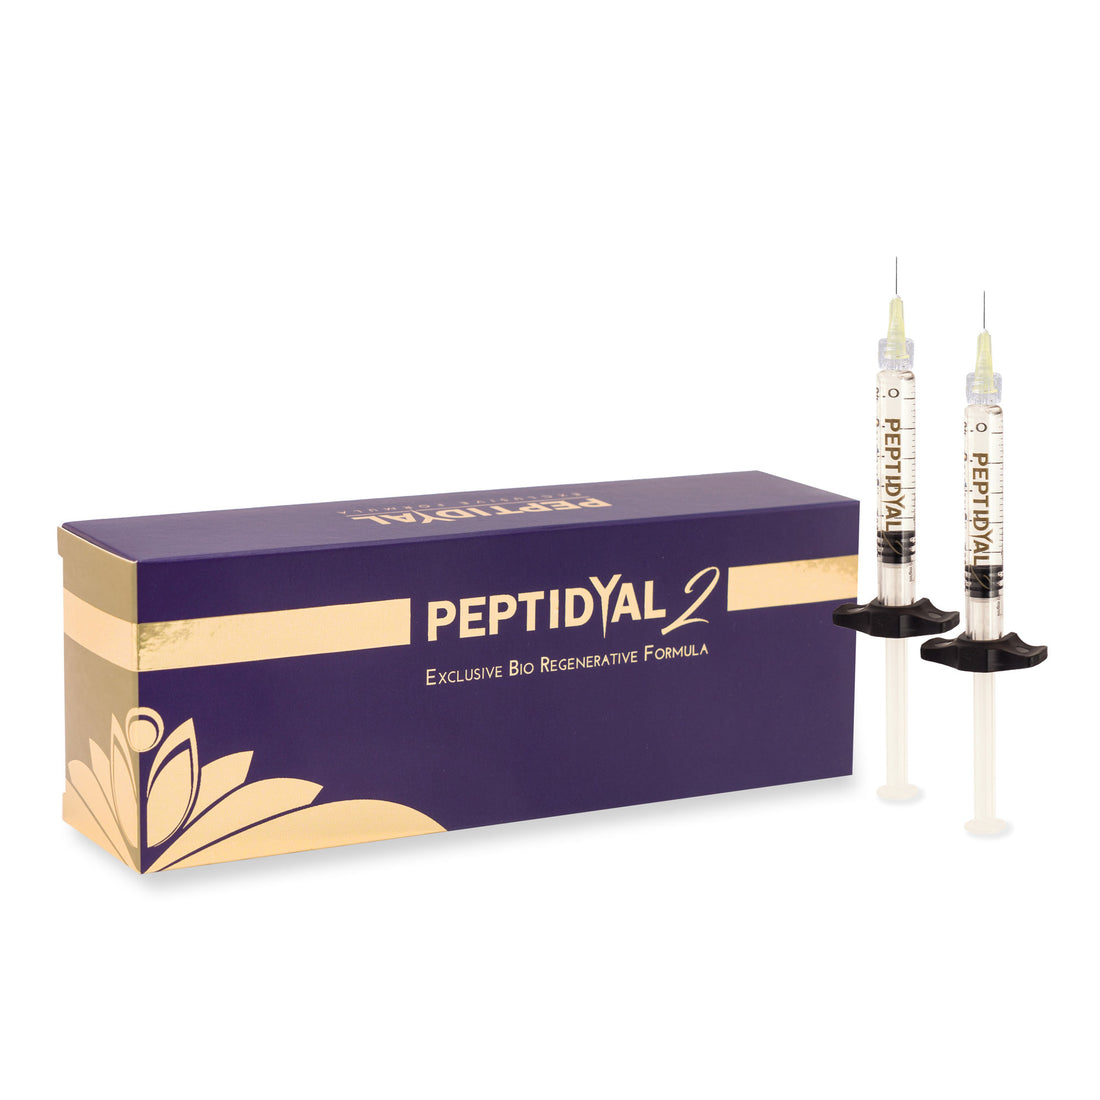 Peptidyal 2 - Exclusive Bio Regenerative Formula